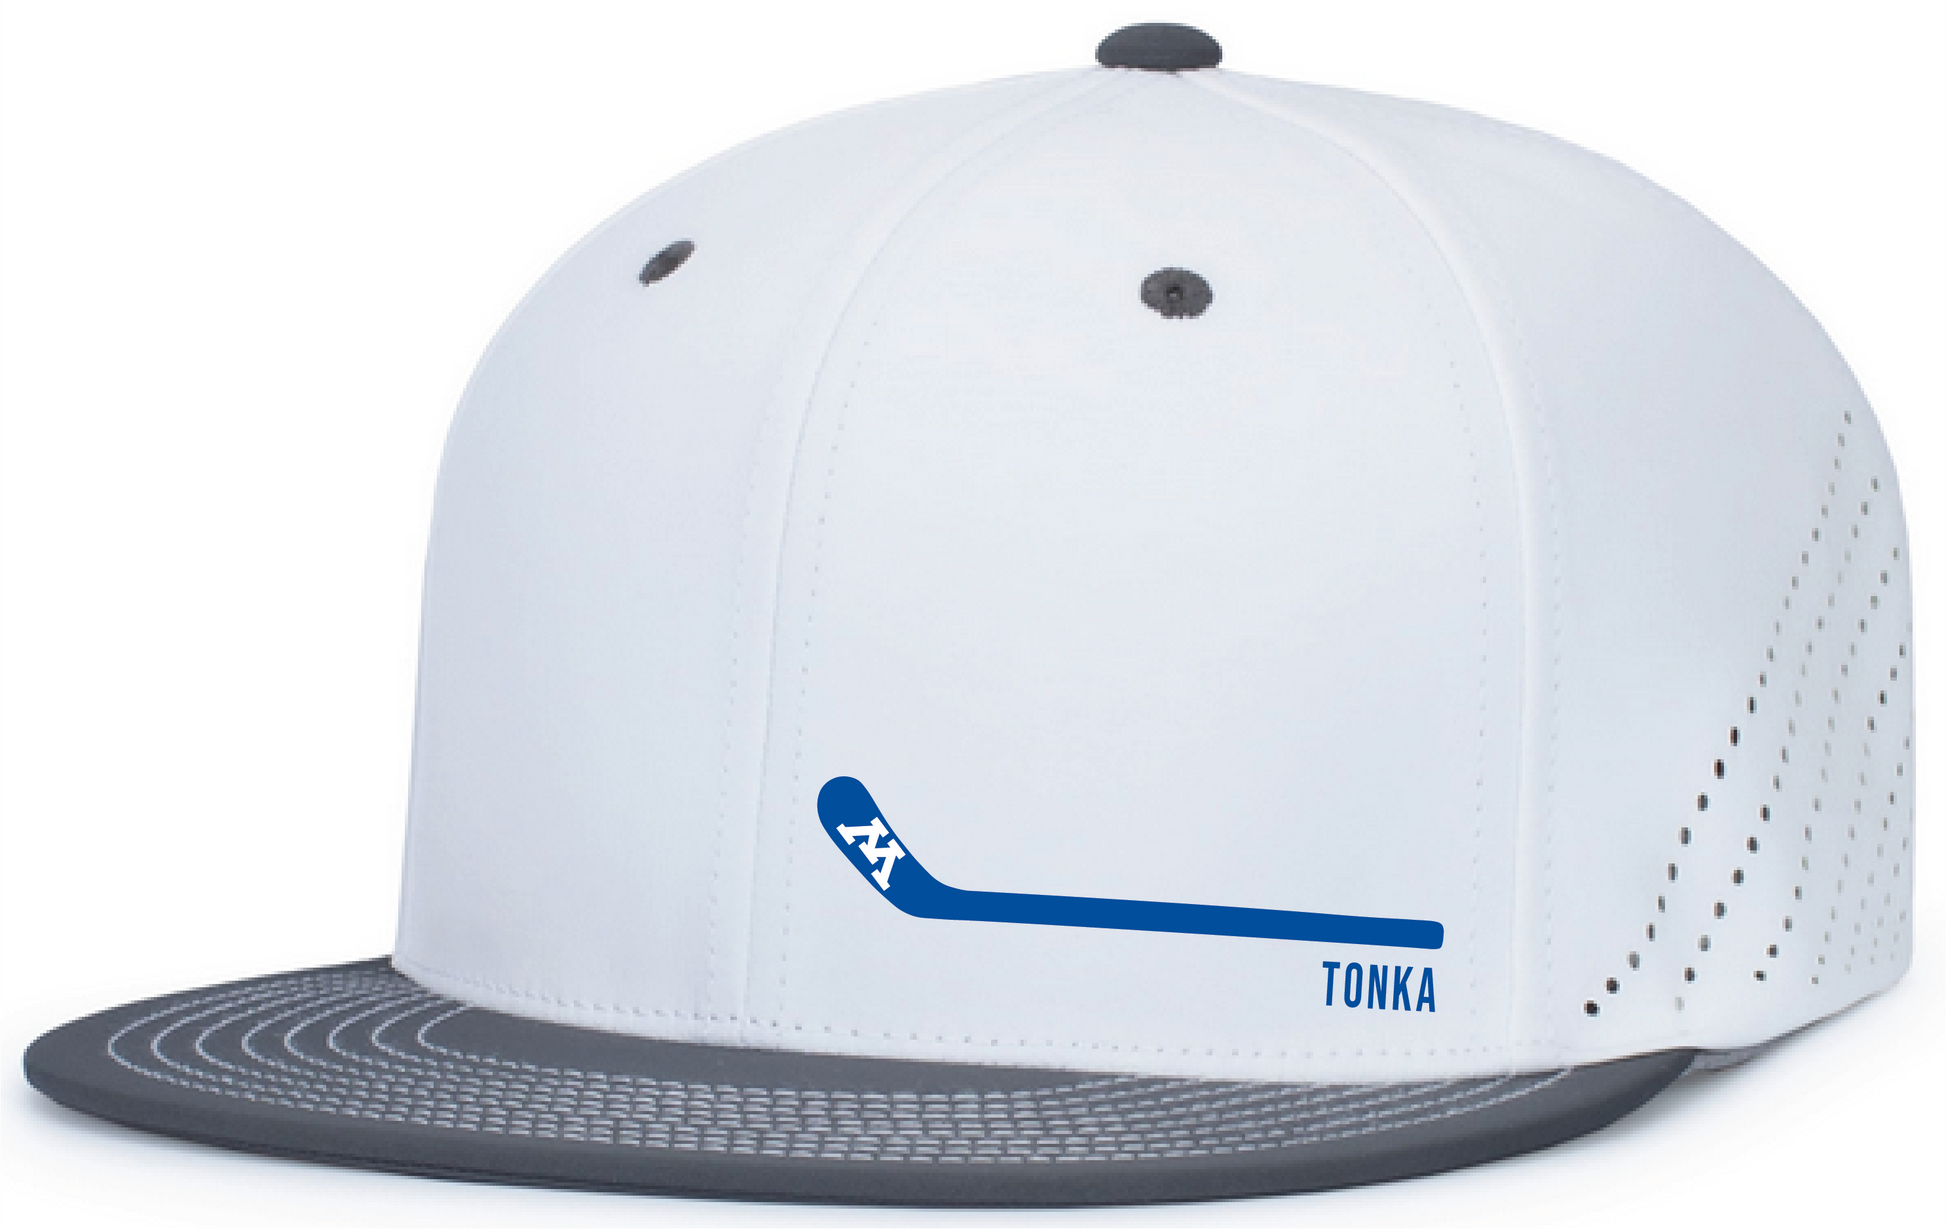 Tonka Hockey Stick White + Graphite